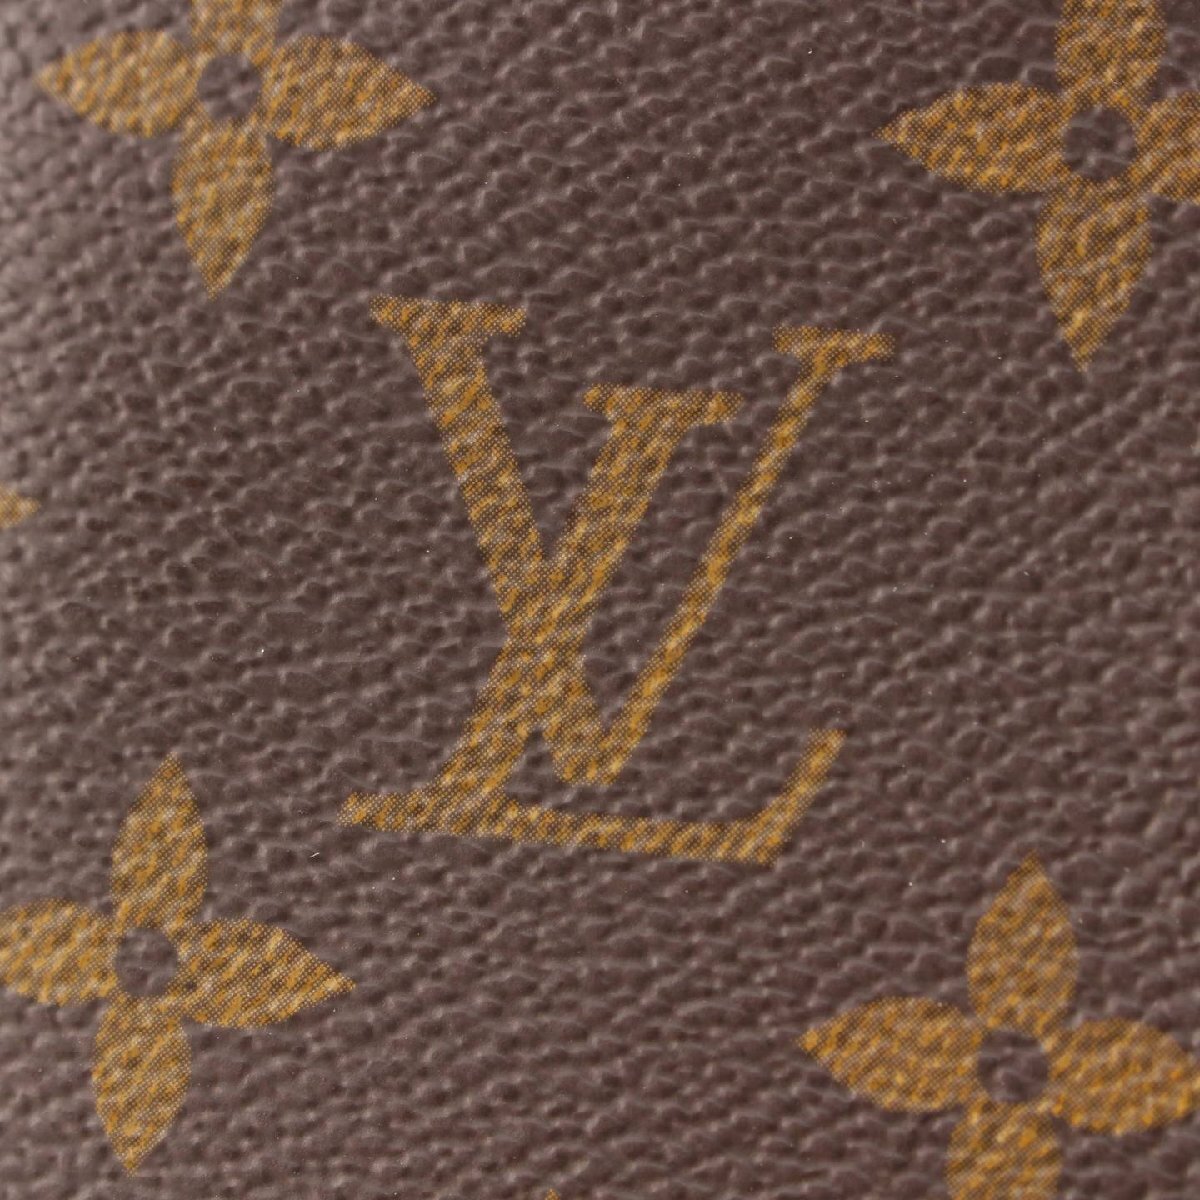 [ Louis Vuitton ]Louis Vuitton монограмма небольшая сумочка 6kre чехол для ключей M62610 Brown [ б/у ][ стандартный товар гарантия ]204248